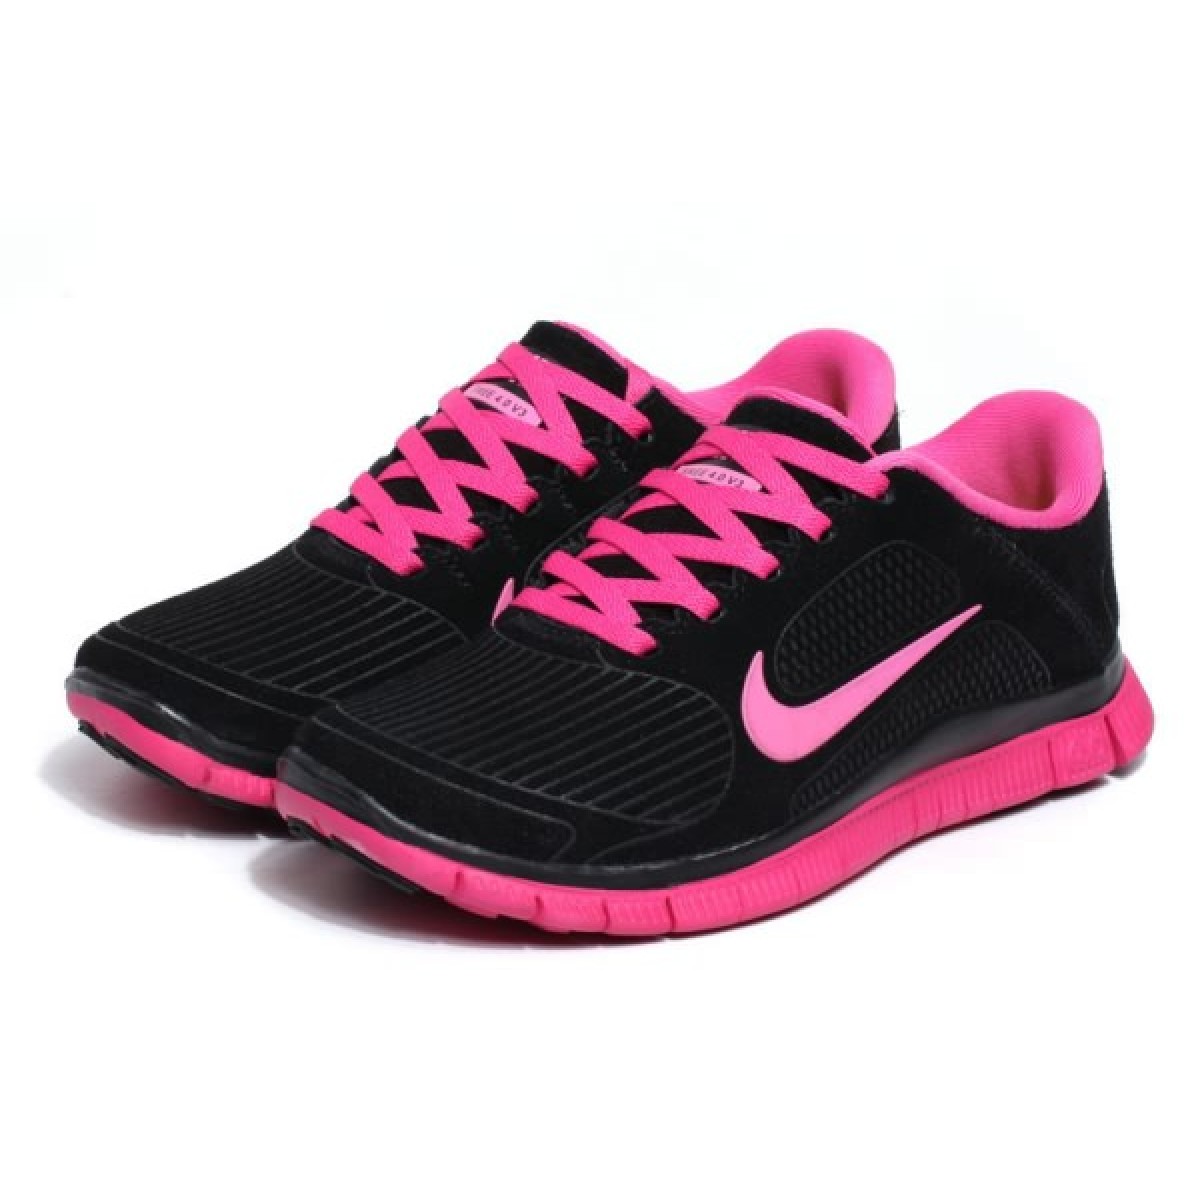 Nike Running Shoes Clipart Neon Nike Running Shoes For Girlsnew Nike